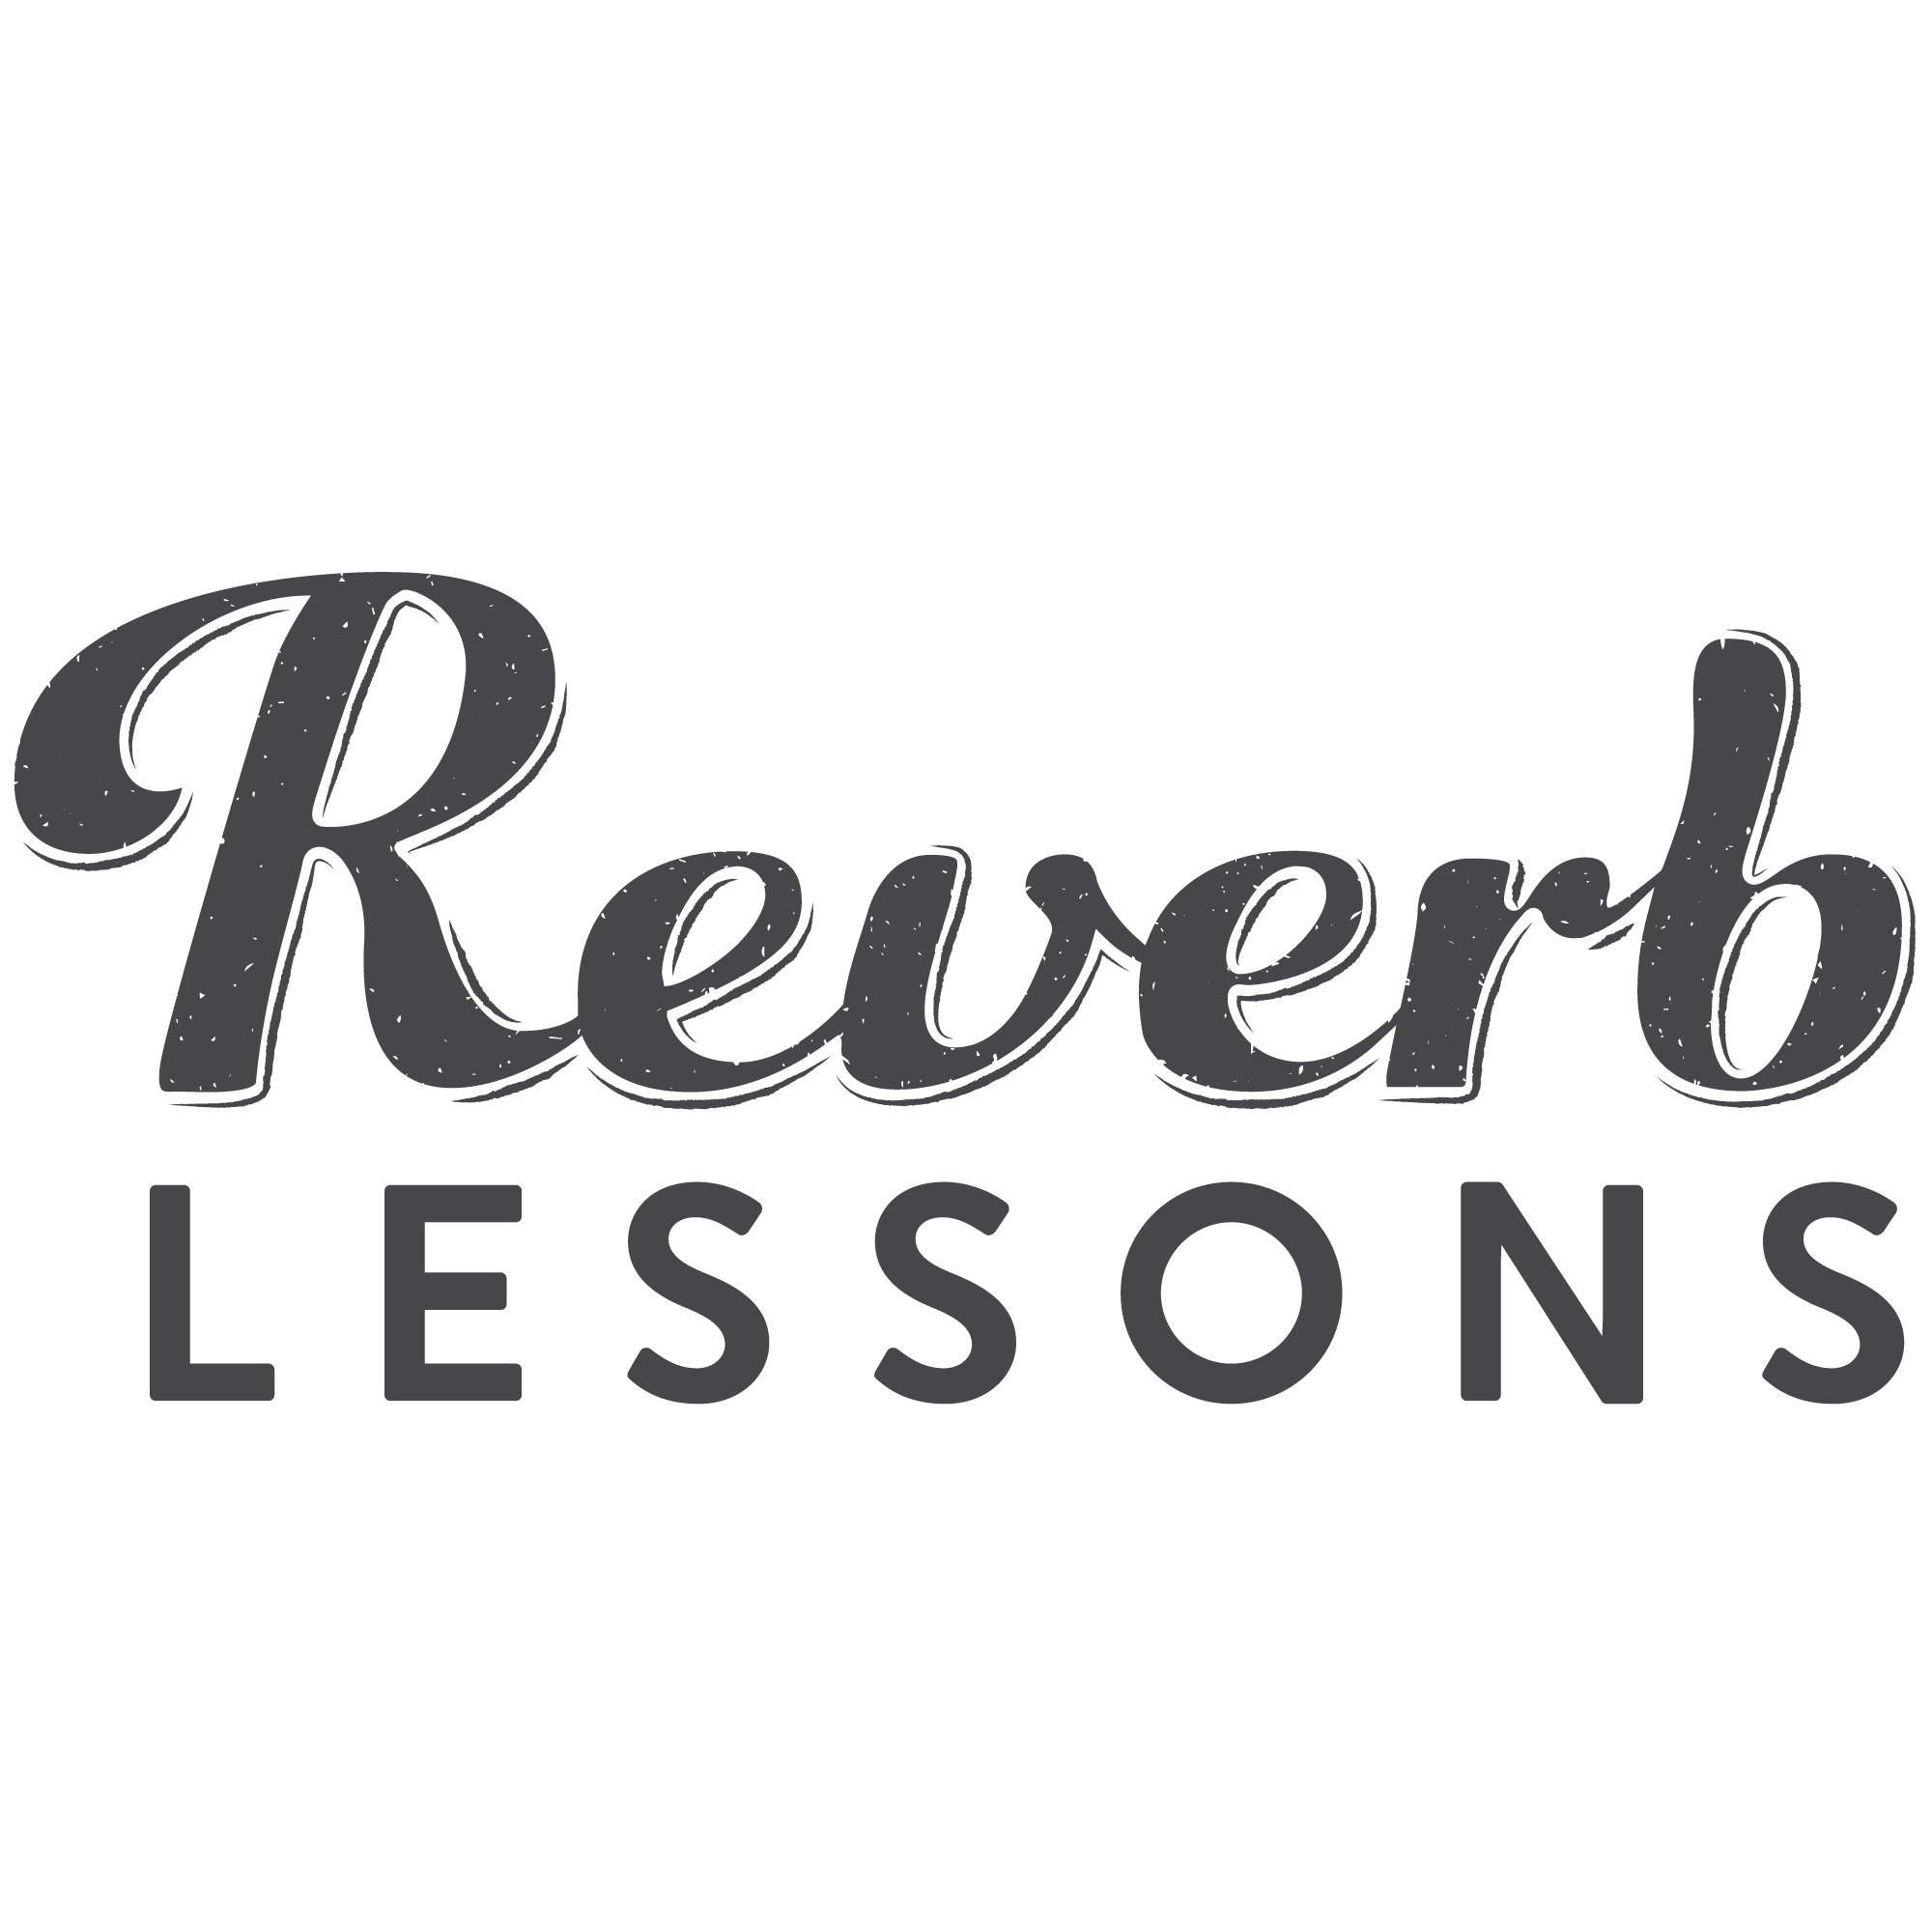 Reverb Lessons